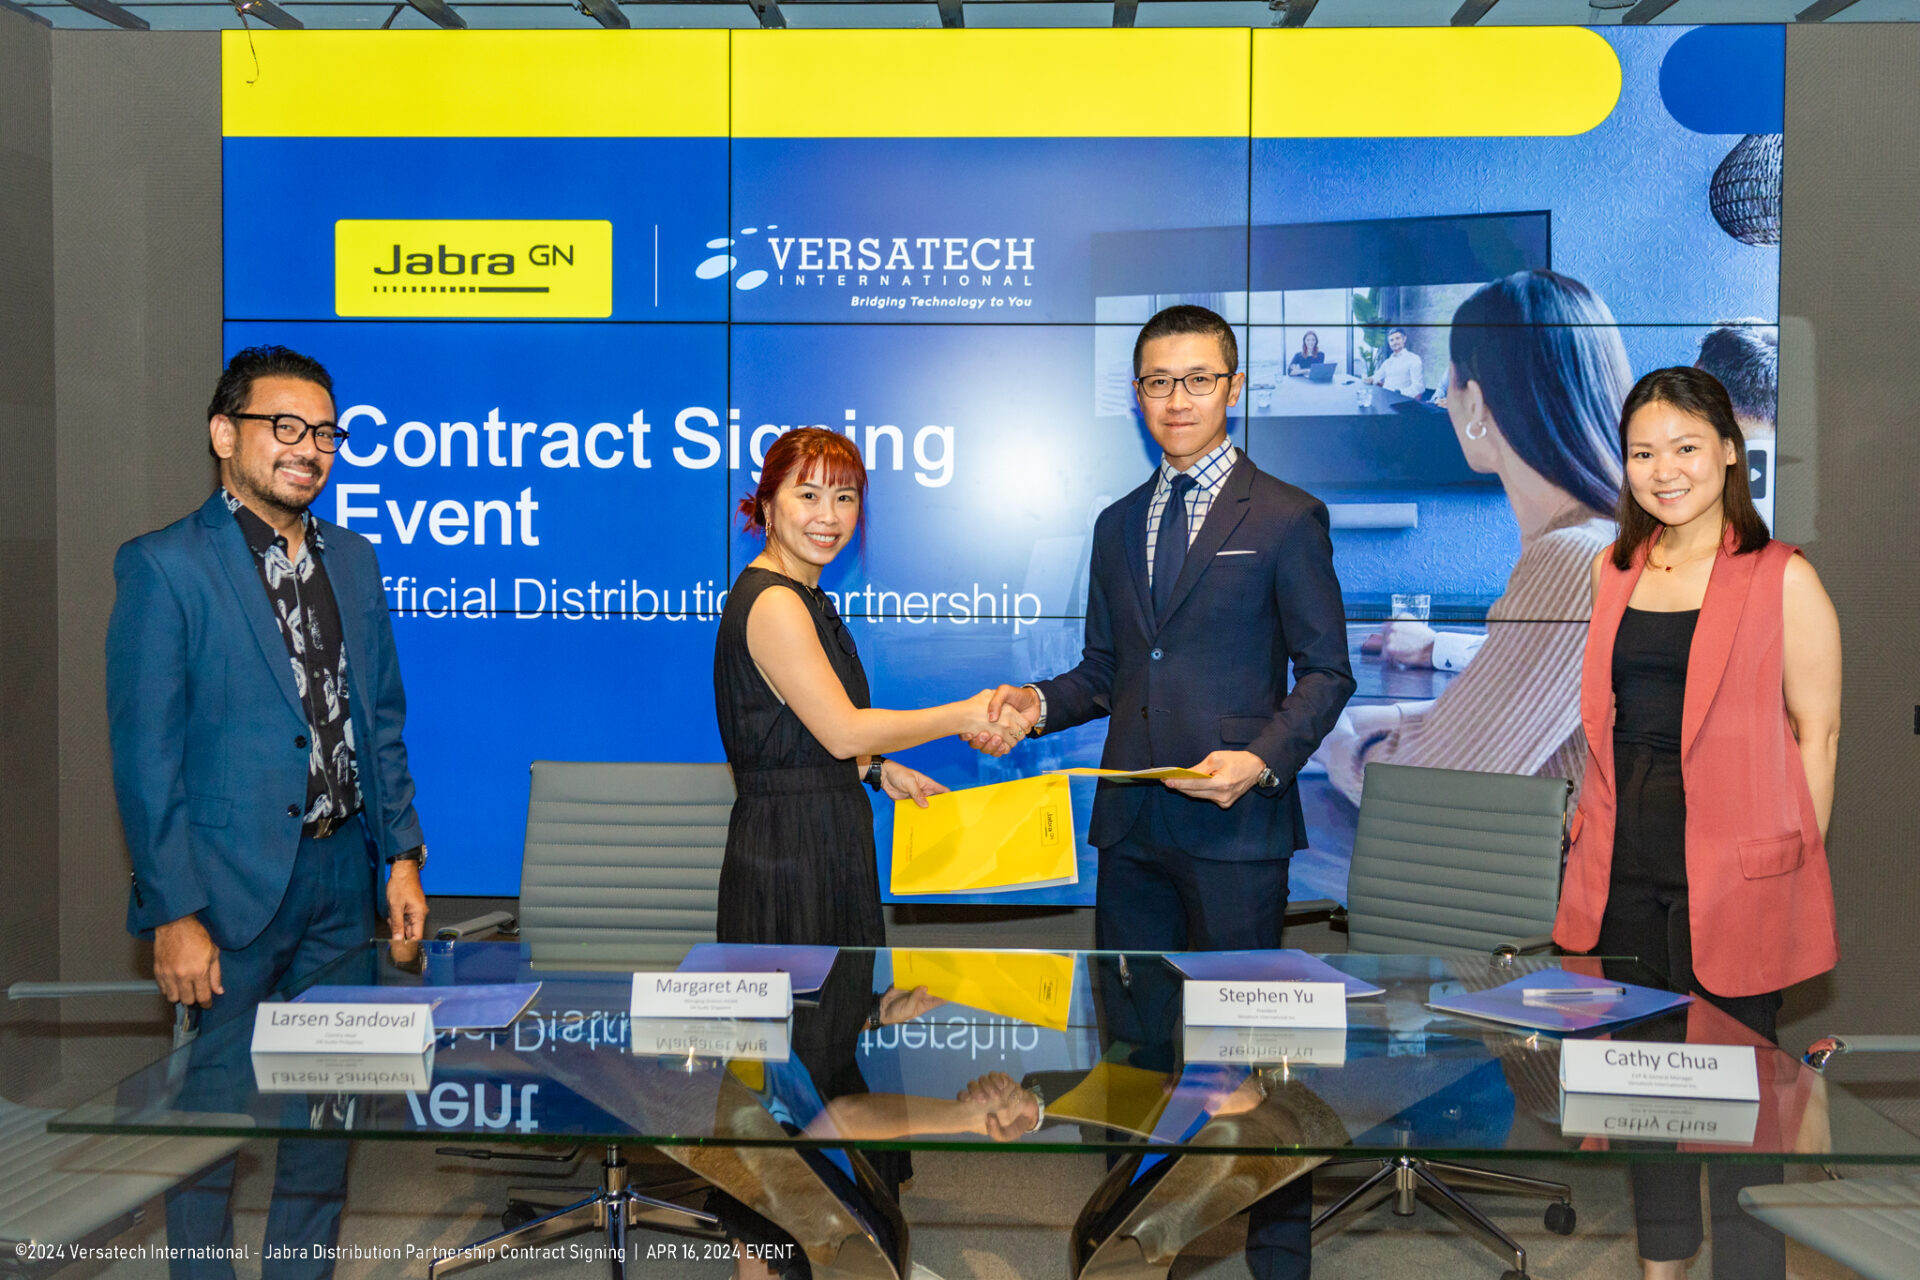 New Distribution Partnership with Jabra and Versatech International